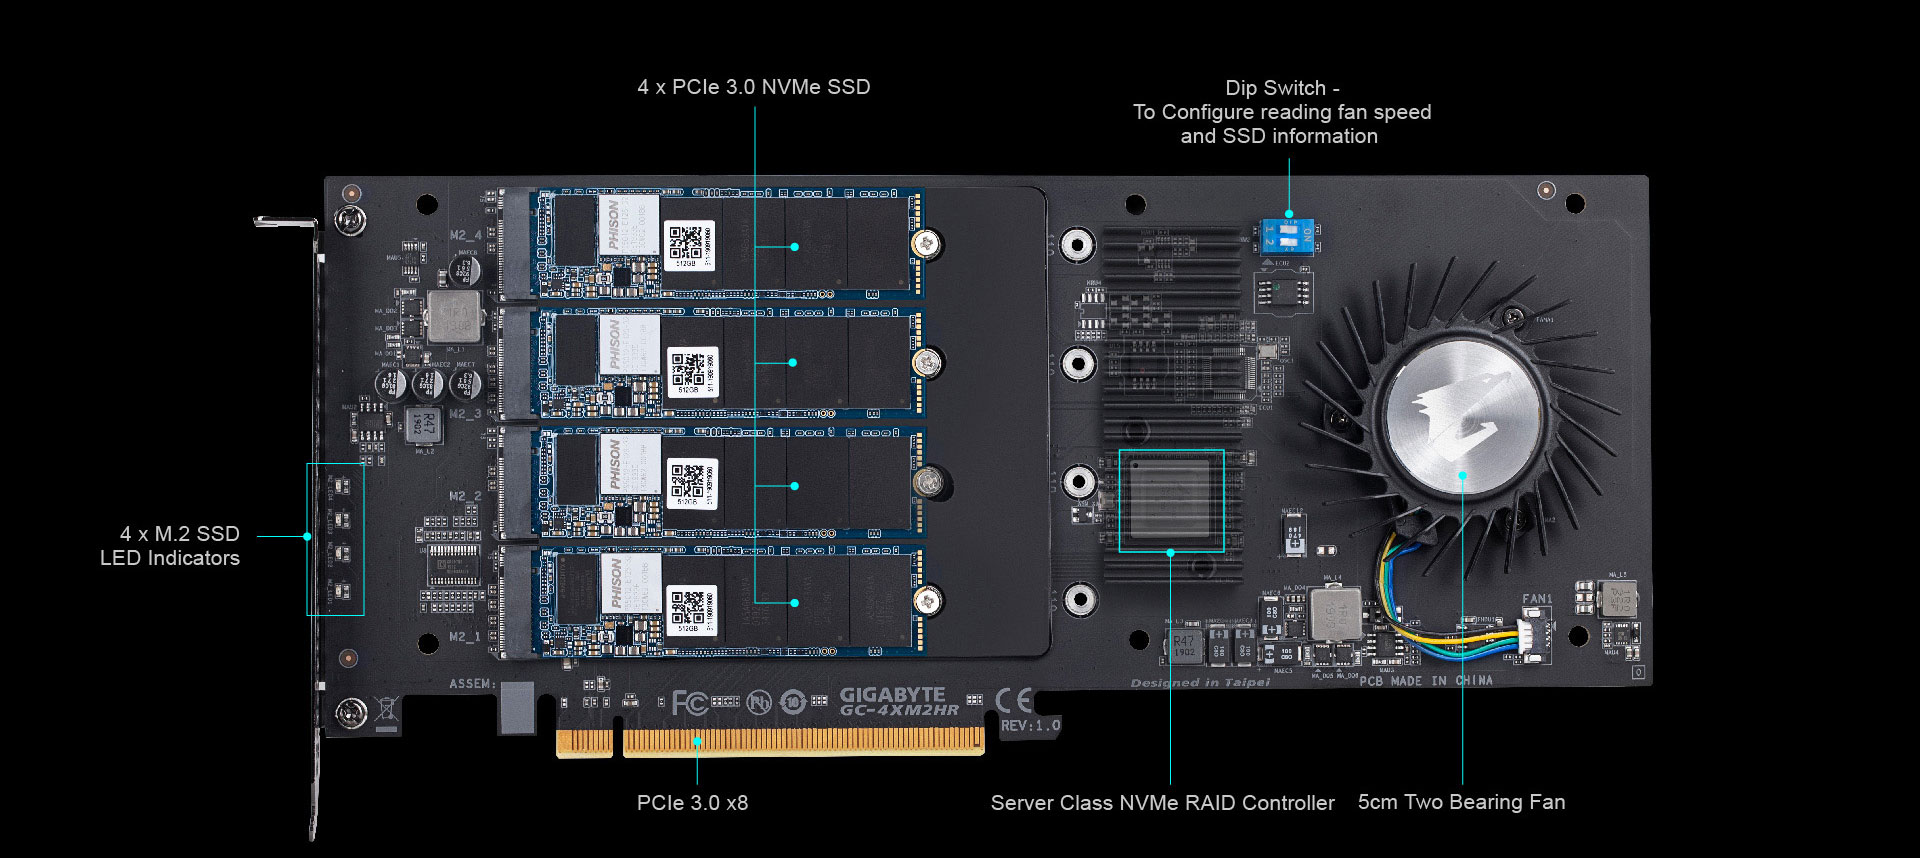 AORUS RAID SSD 2TB Key Features